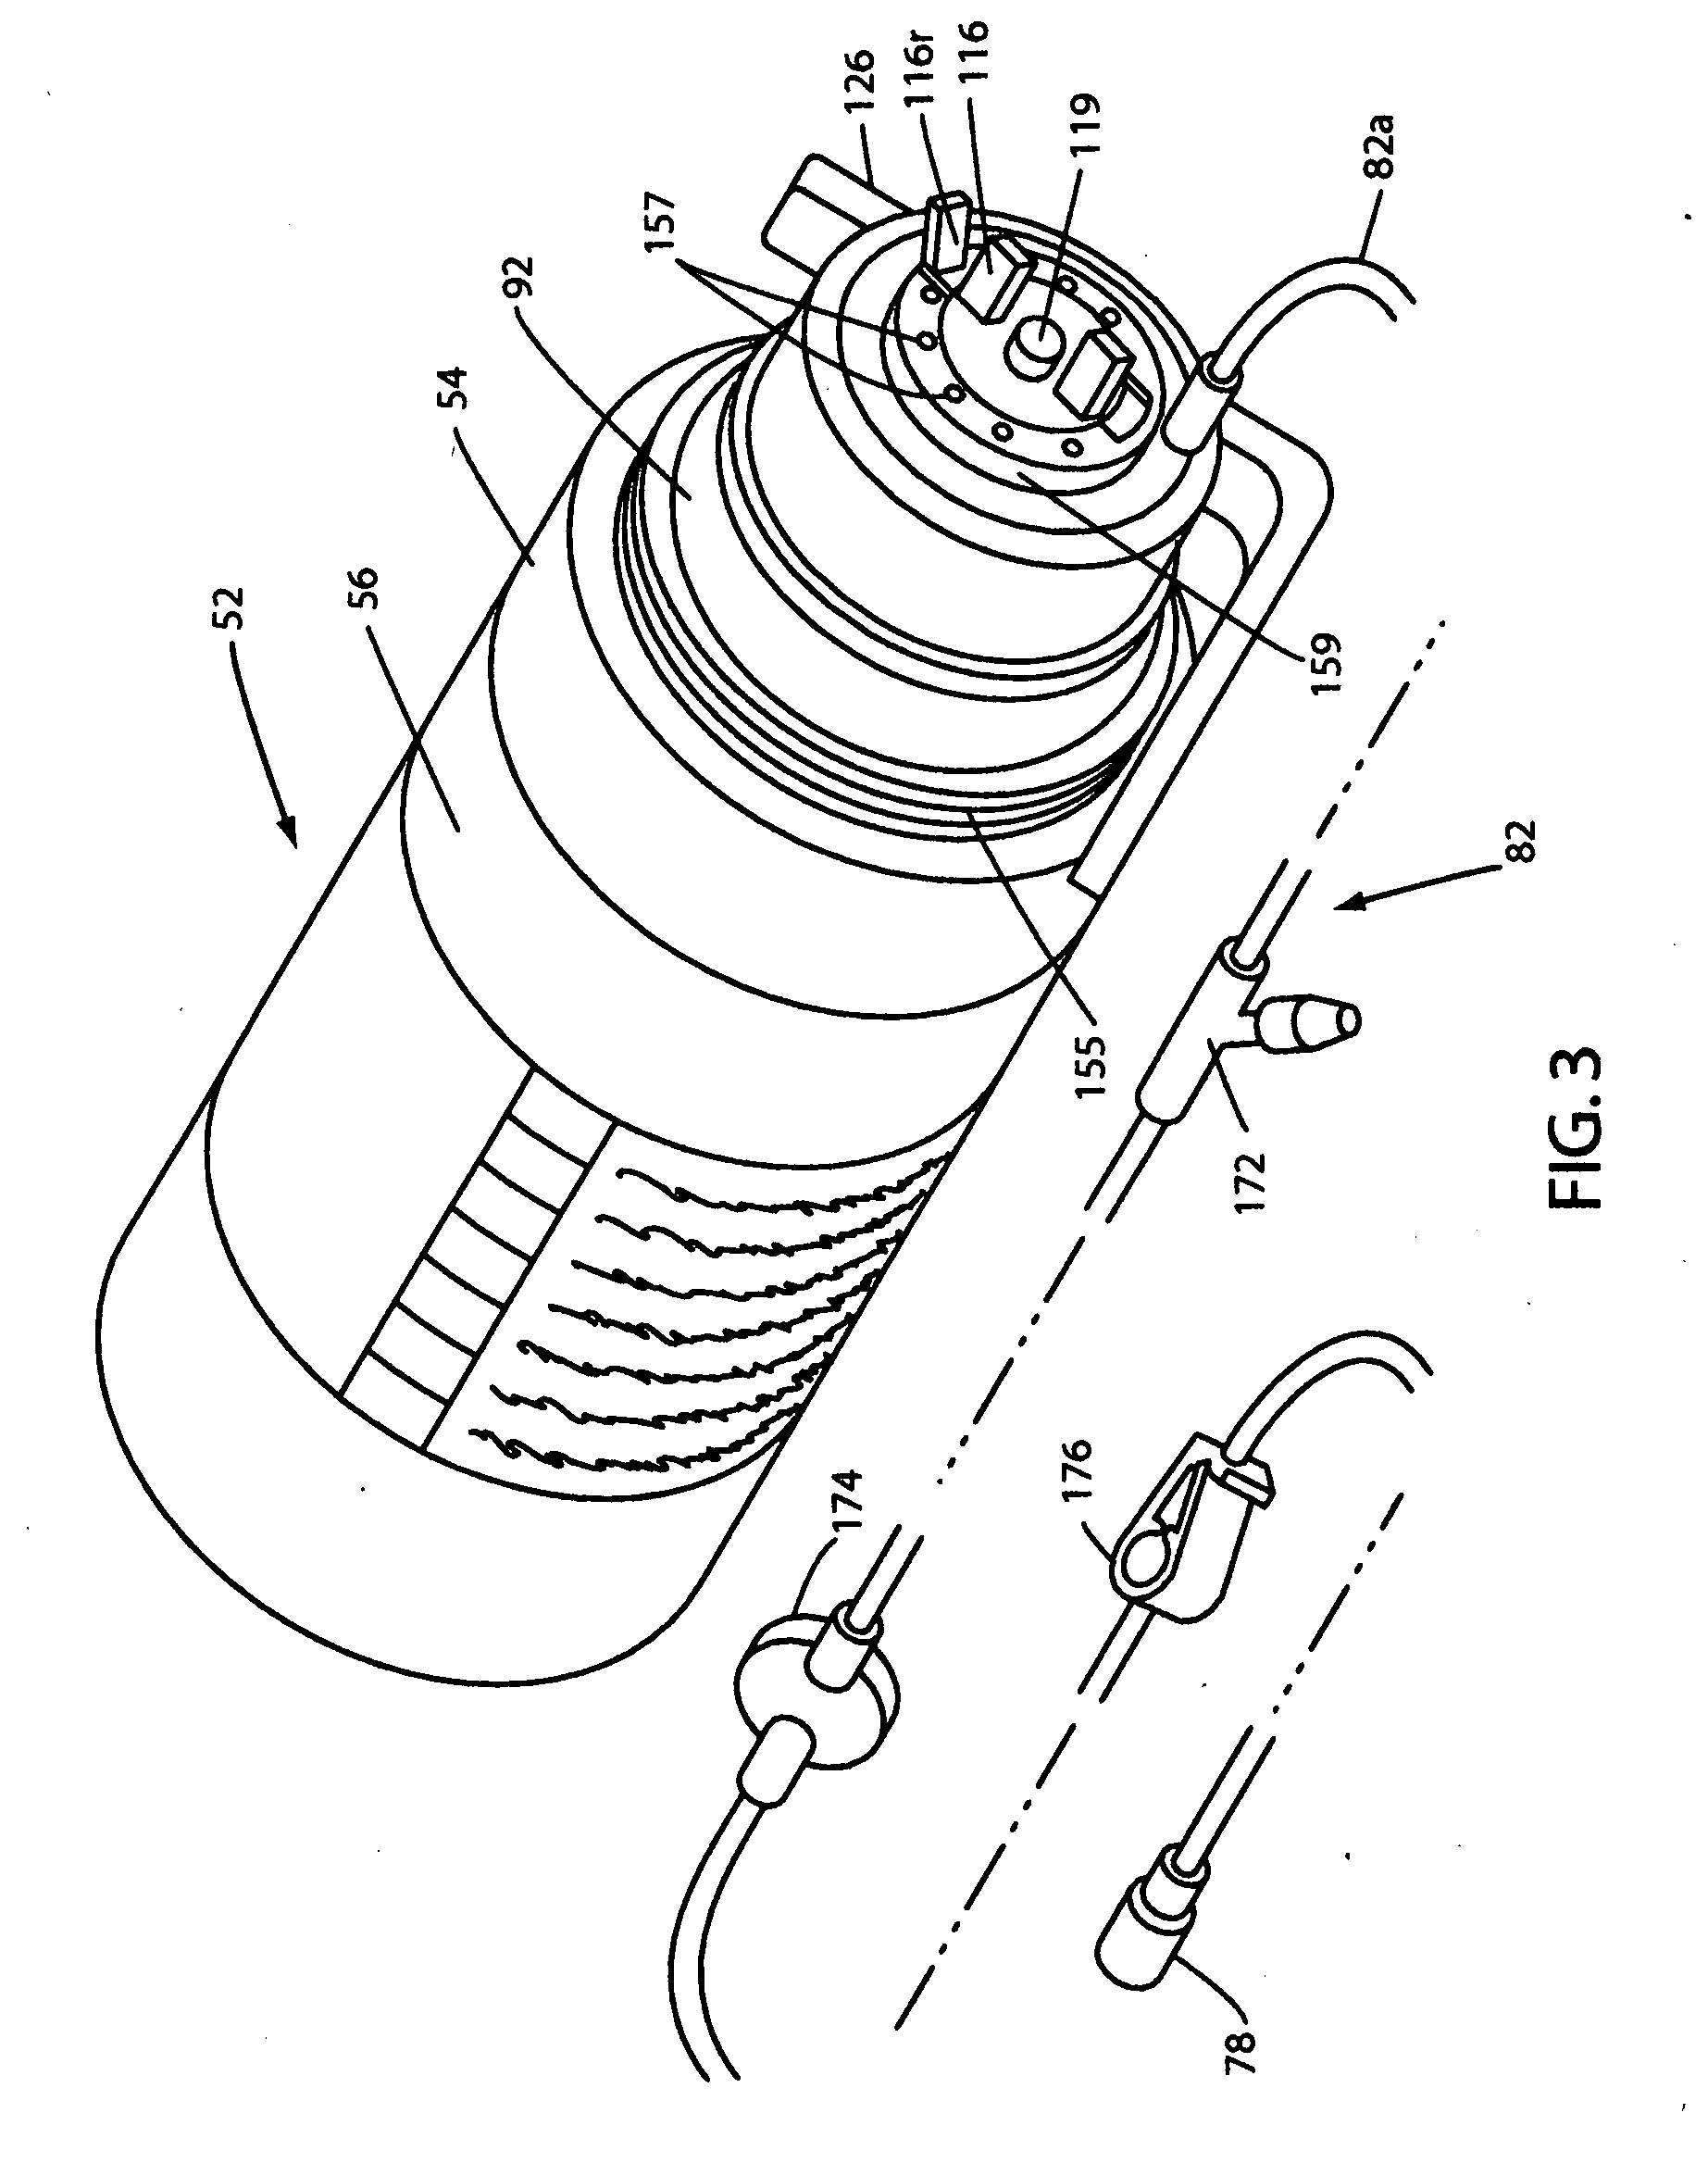 Fluid dispensing device